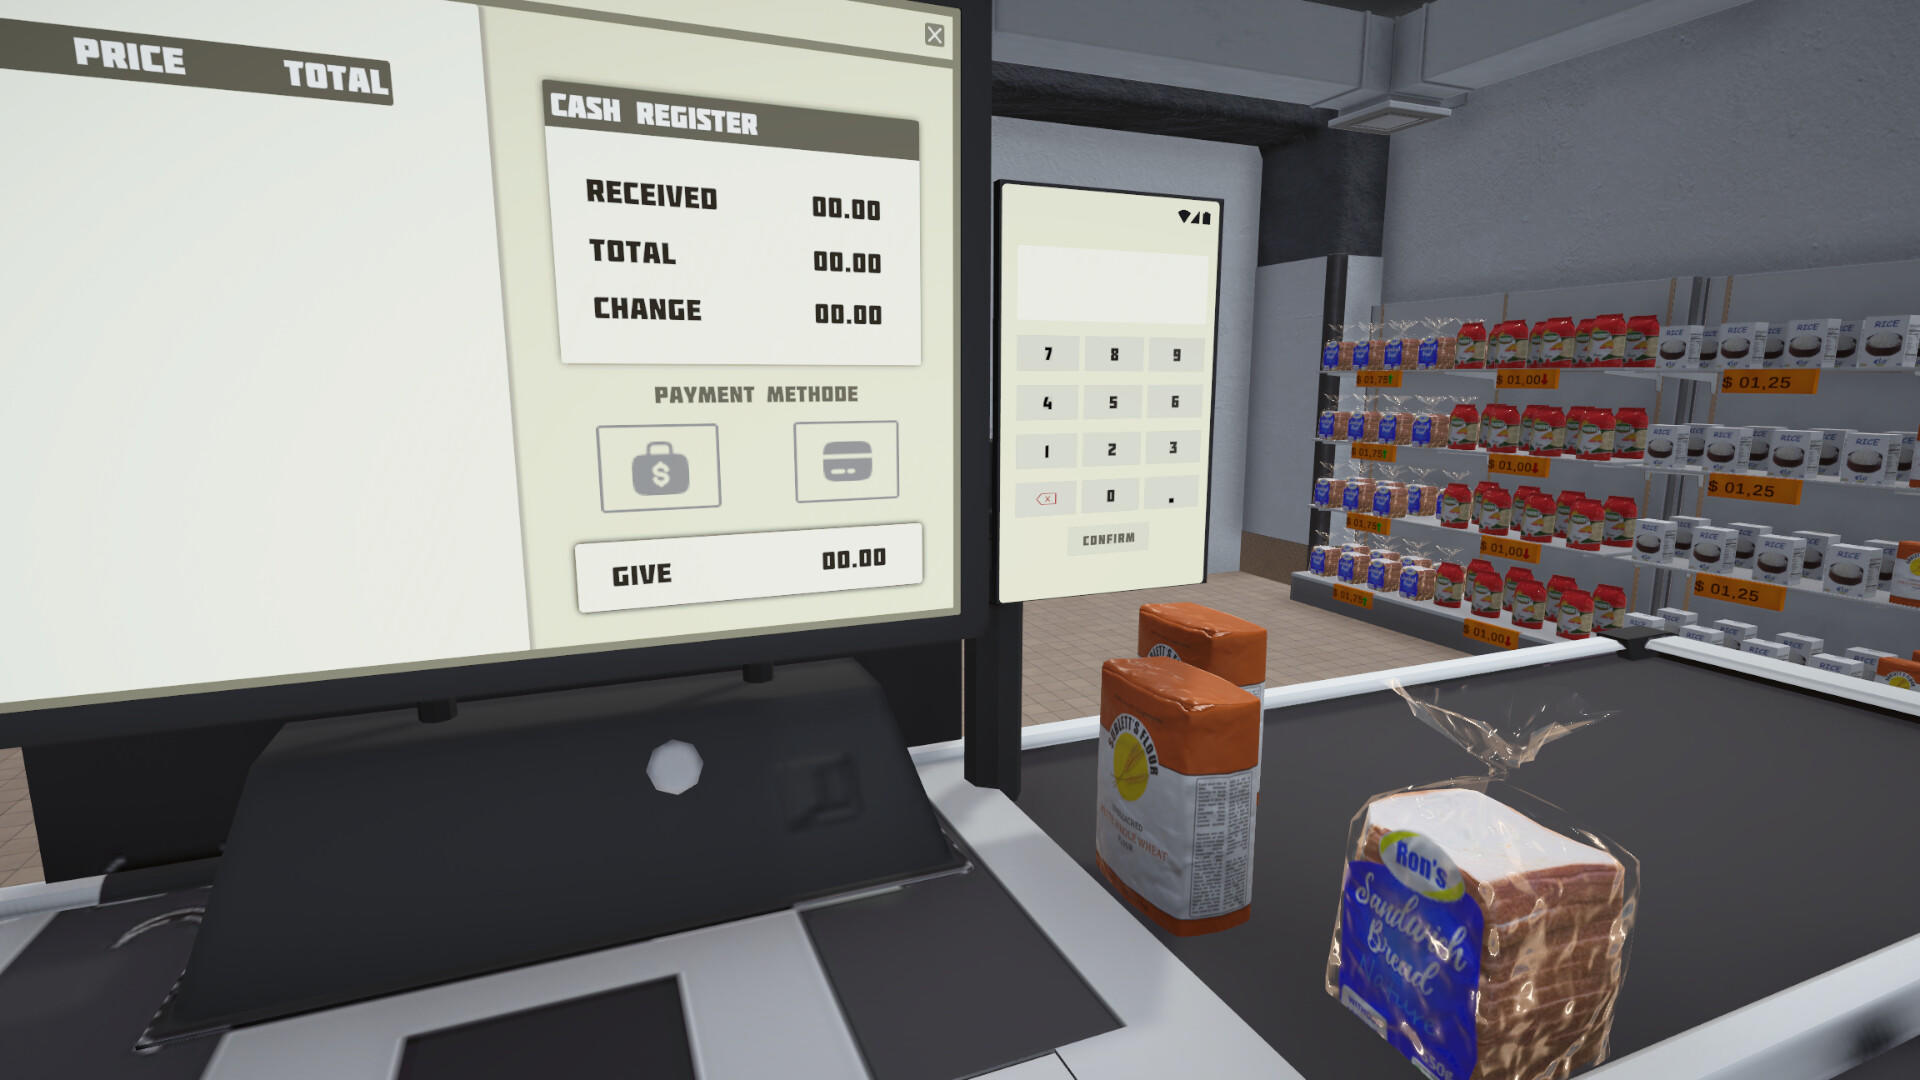 siMarket Supermarket Simulator ภาพหน้าจอเกม